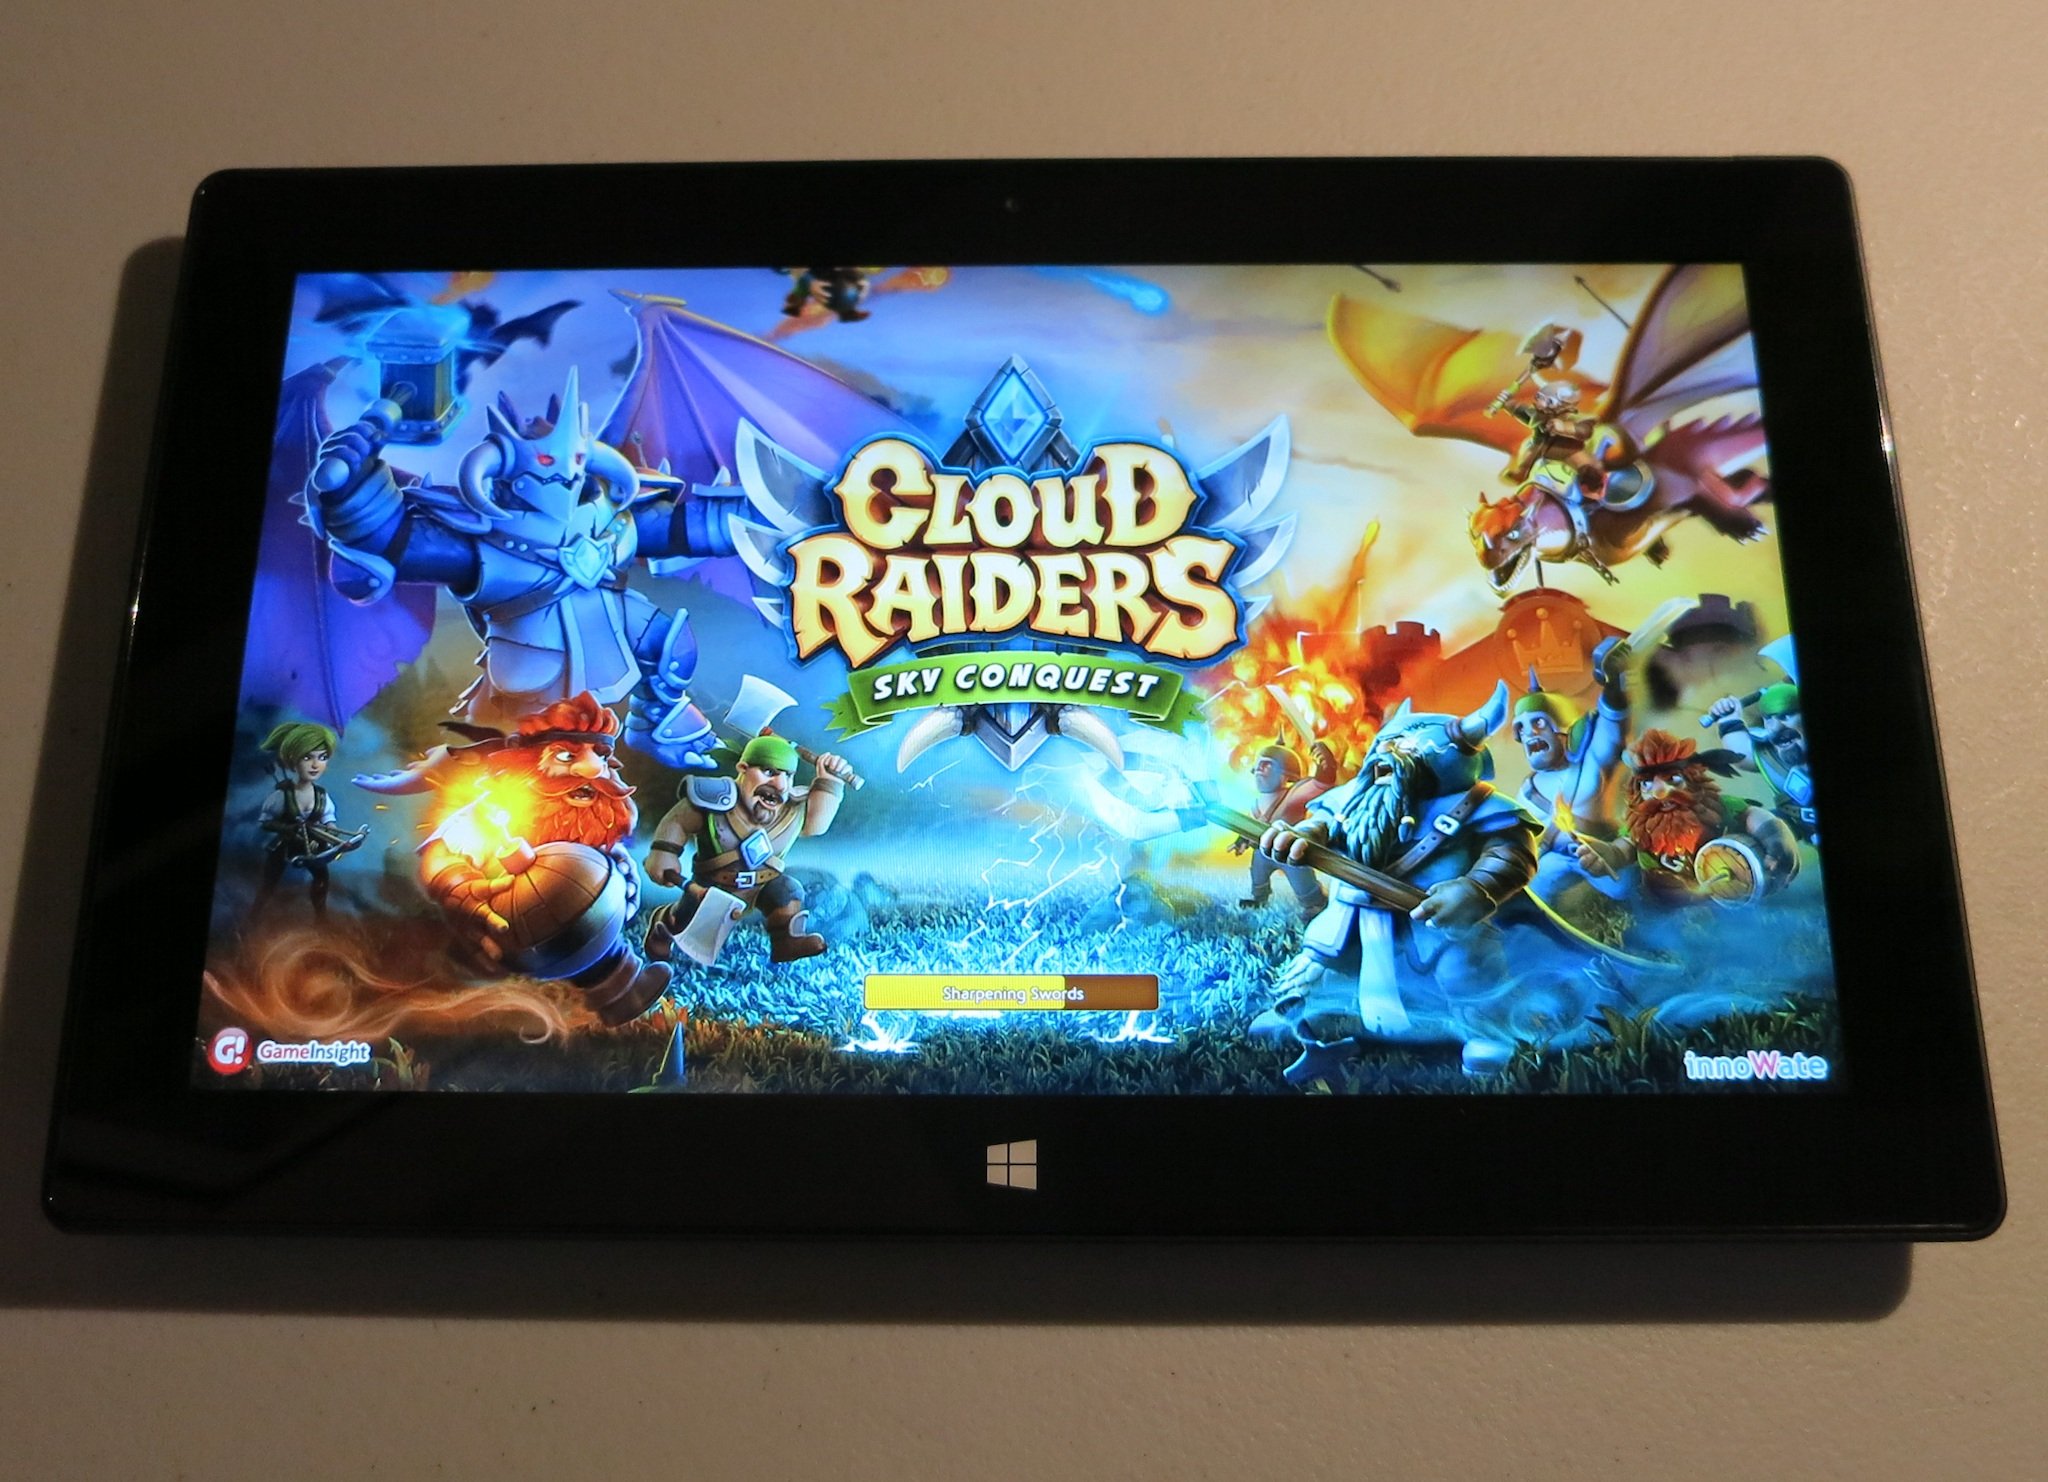 Cloud Raiders sails onto Windows 8 Microsoft Surface Pro